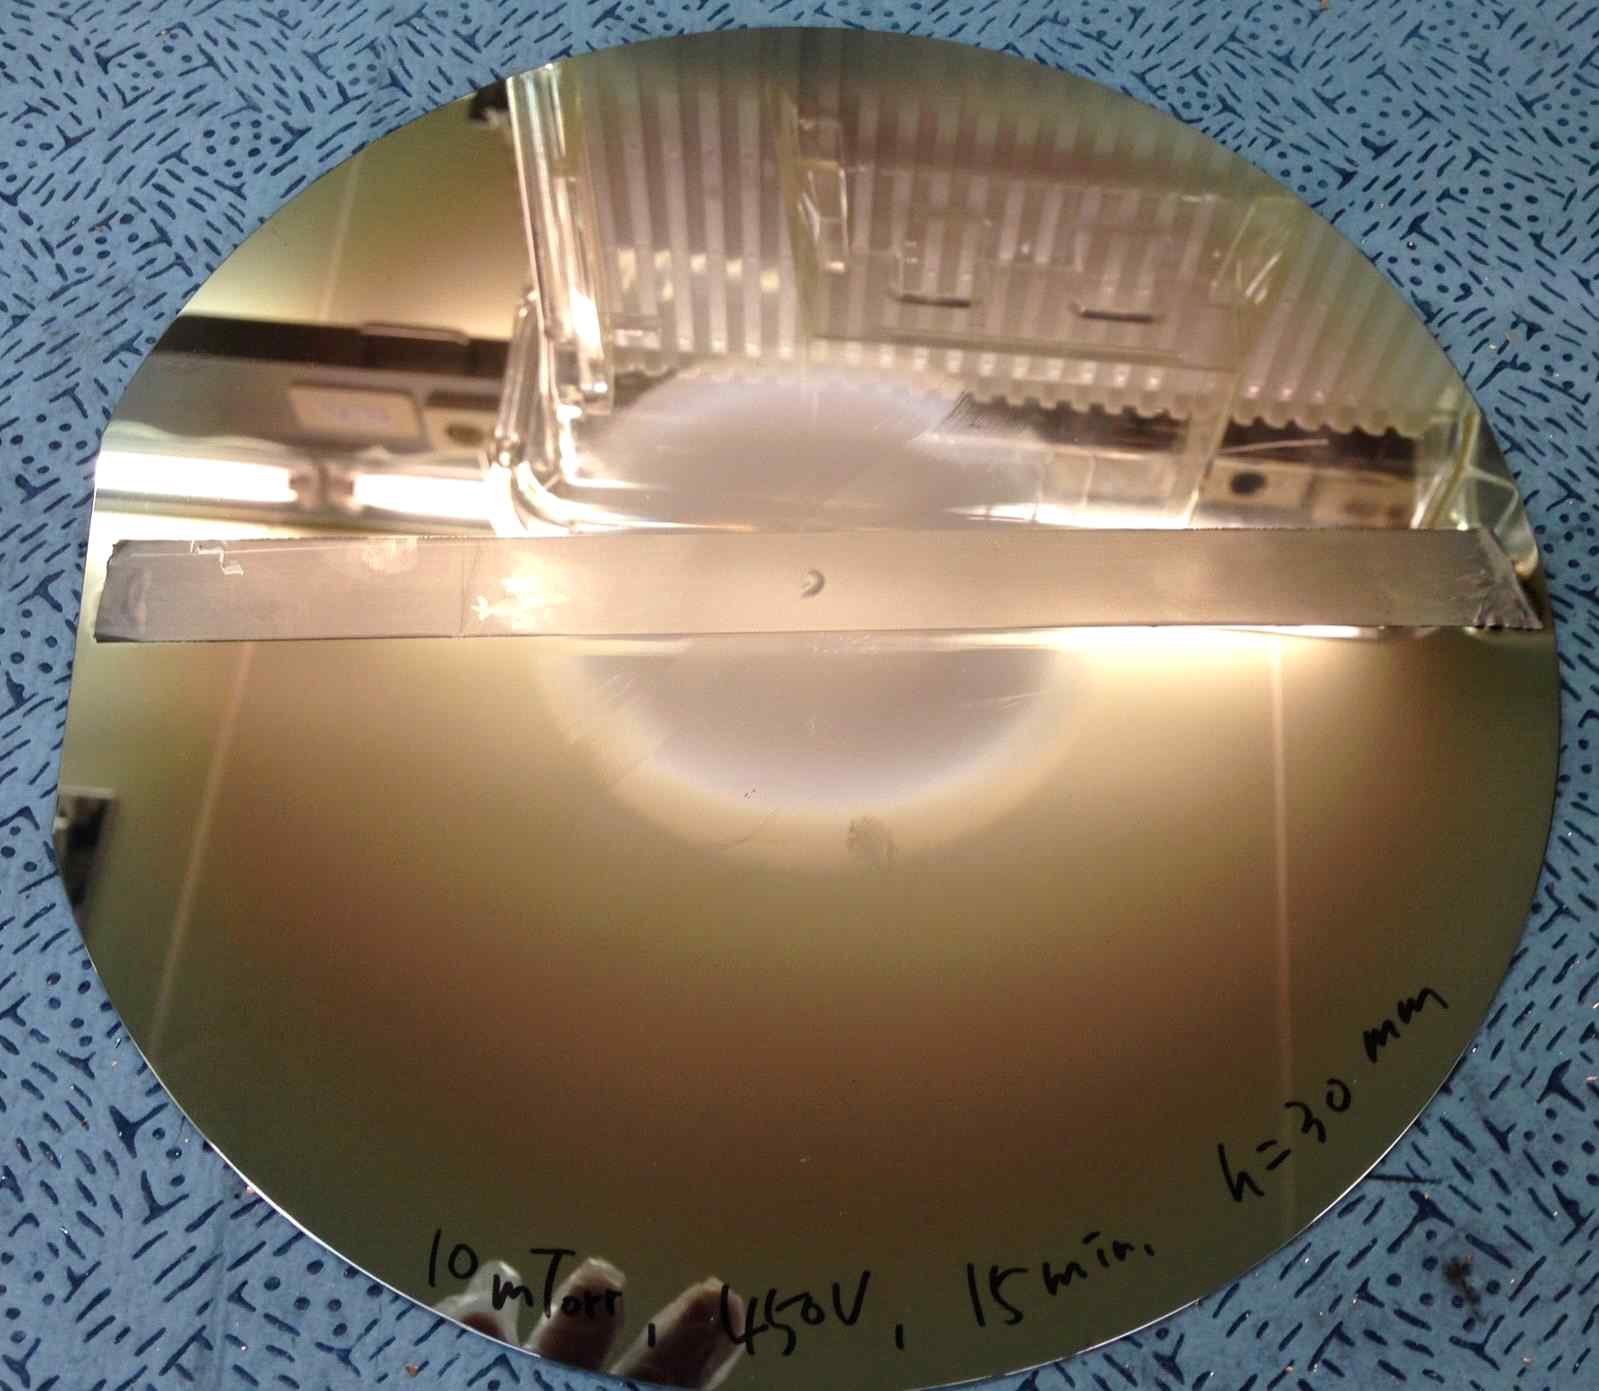 10 mTorr, 450 V, 15 min, h = 30 mm 플라즈마 방전 후 구리가 증착된 실리콘 기판 사진